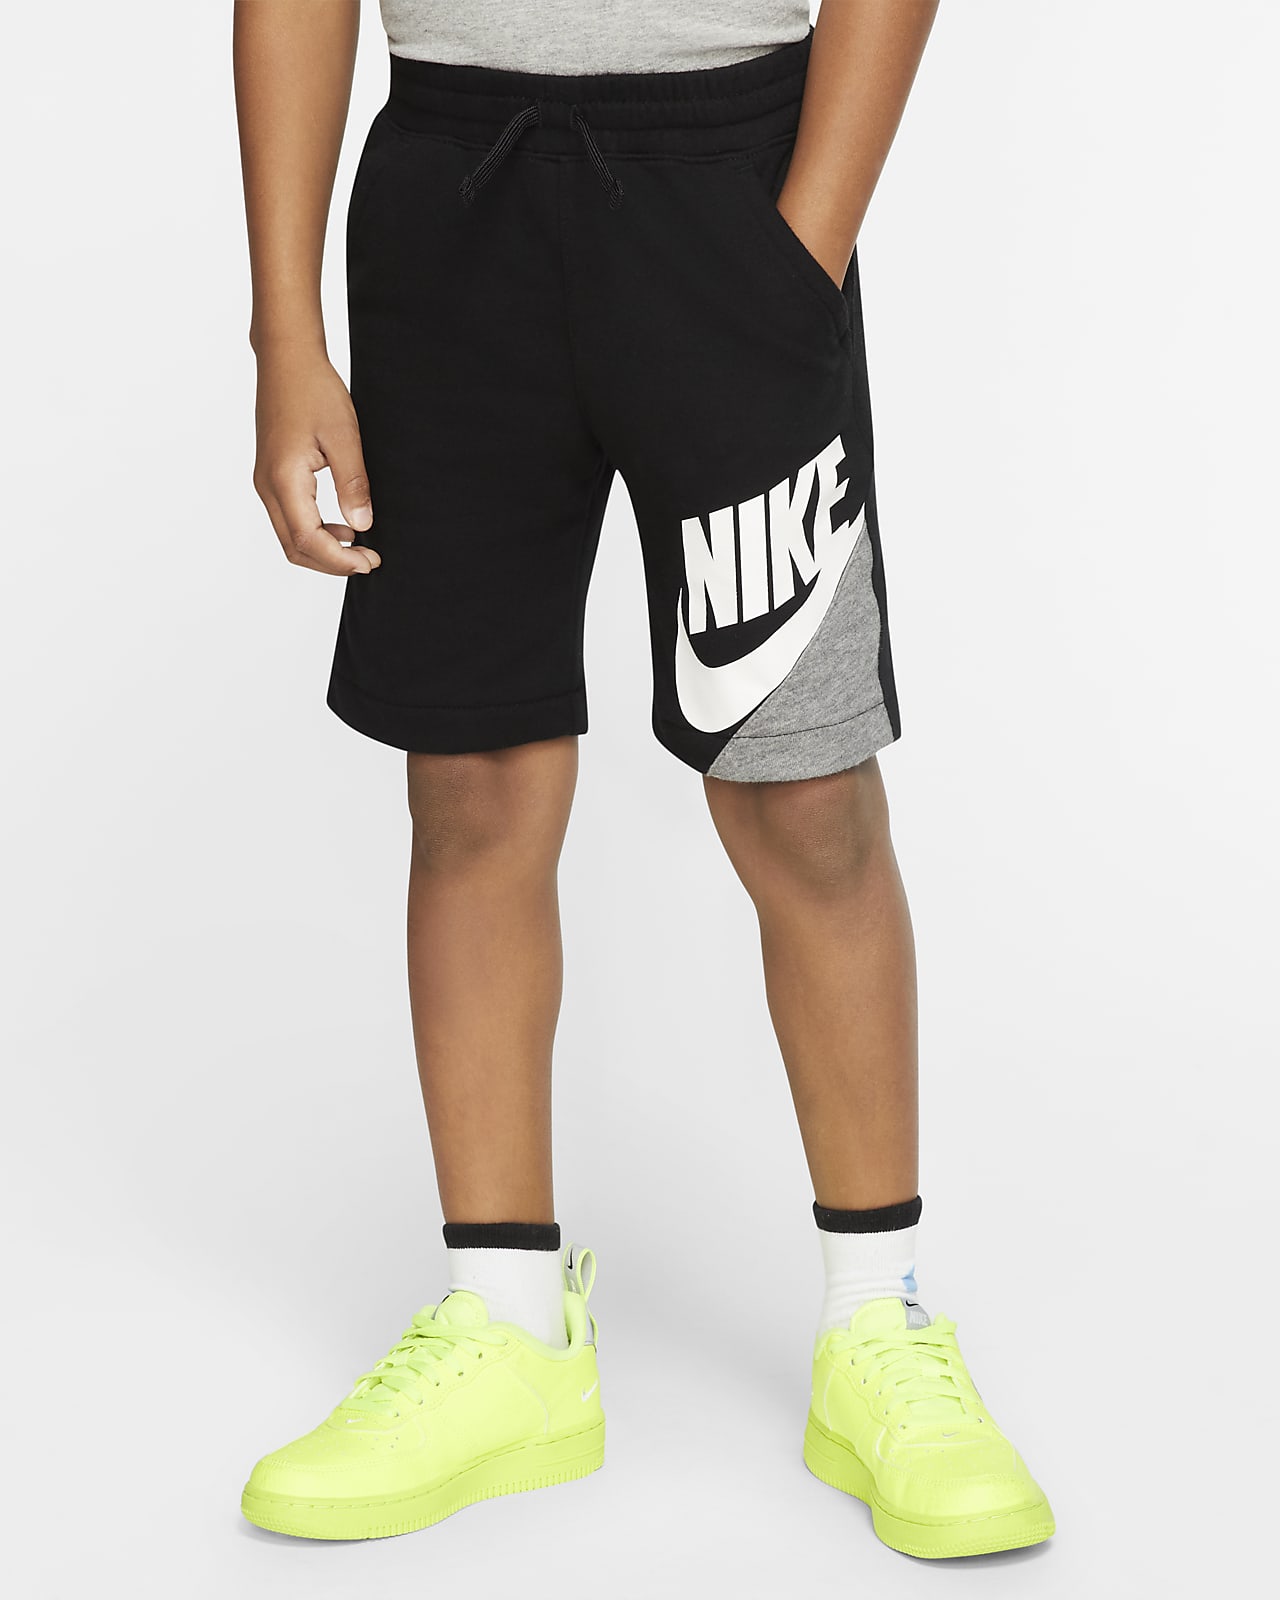 Shorts para niños talla pequeña Nike Sportswear. Nike.com